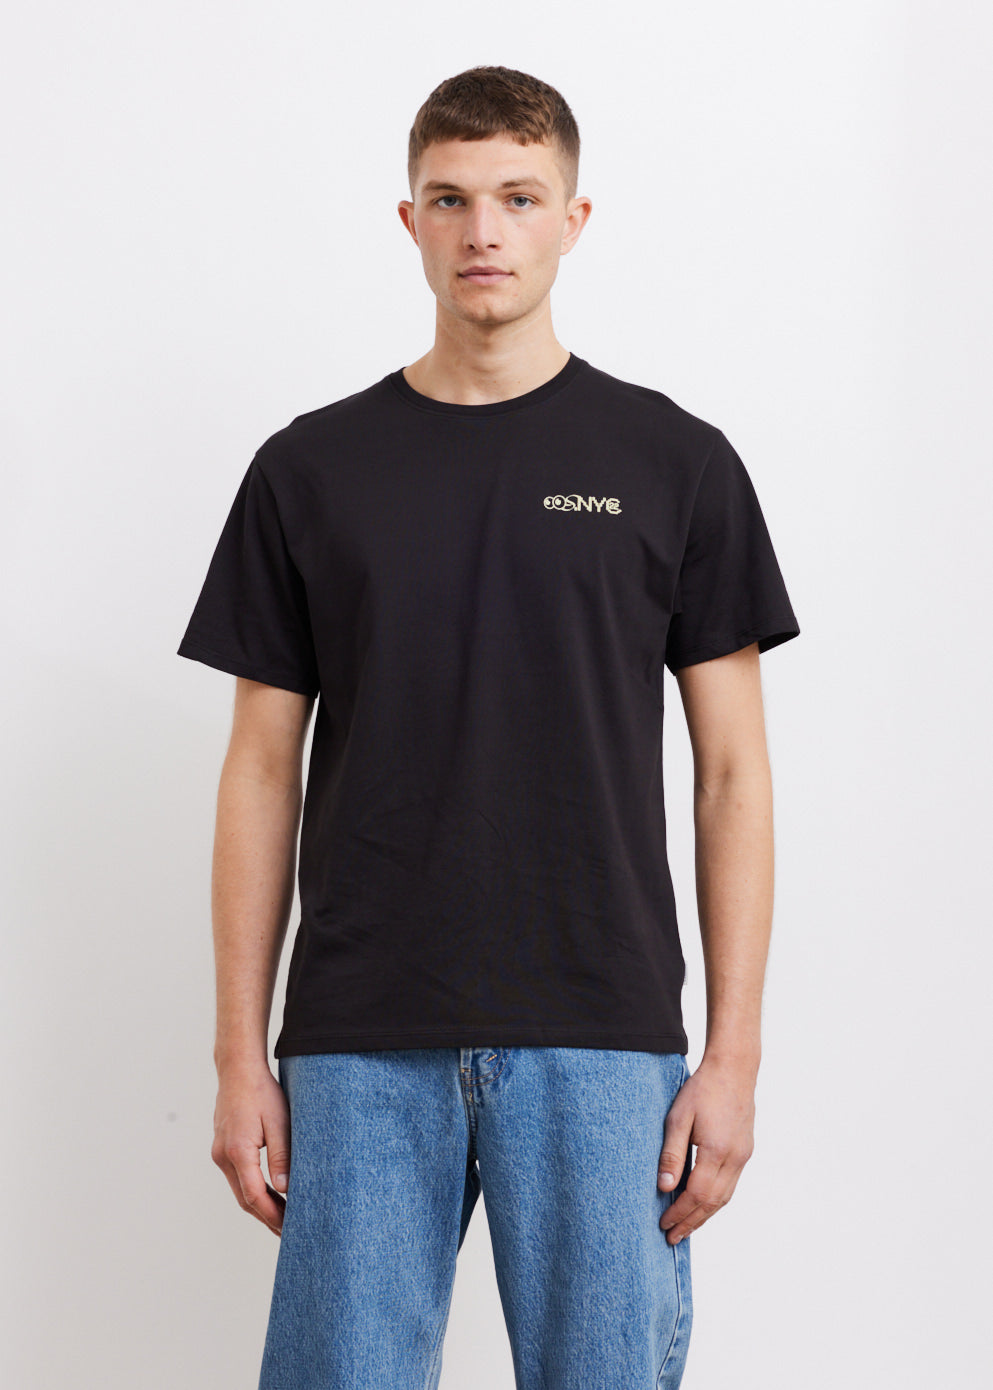 Acid Spring Standard Short Sleeve T-Shirt